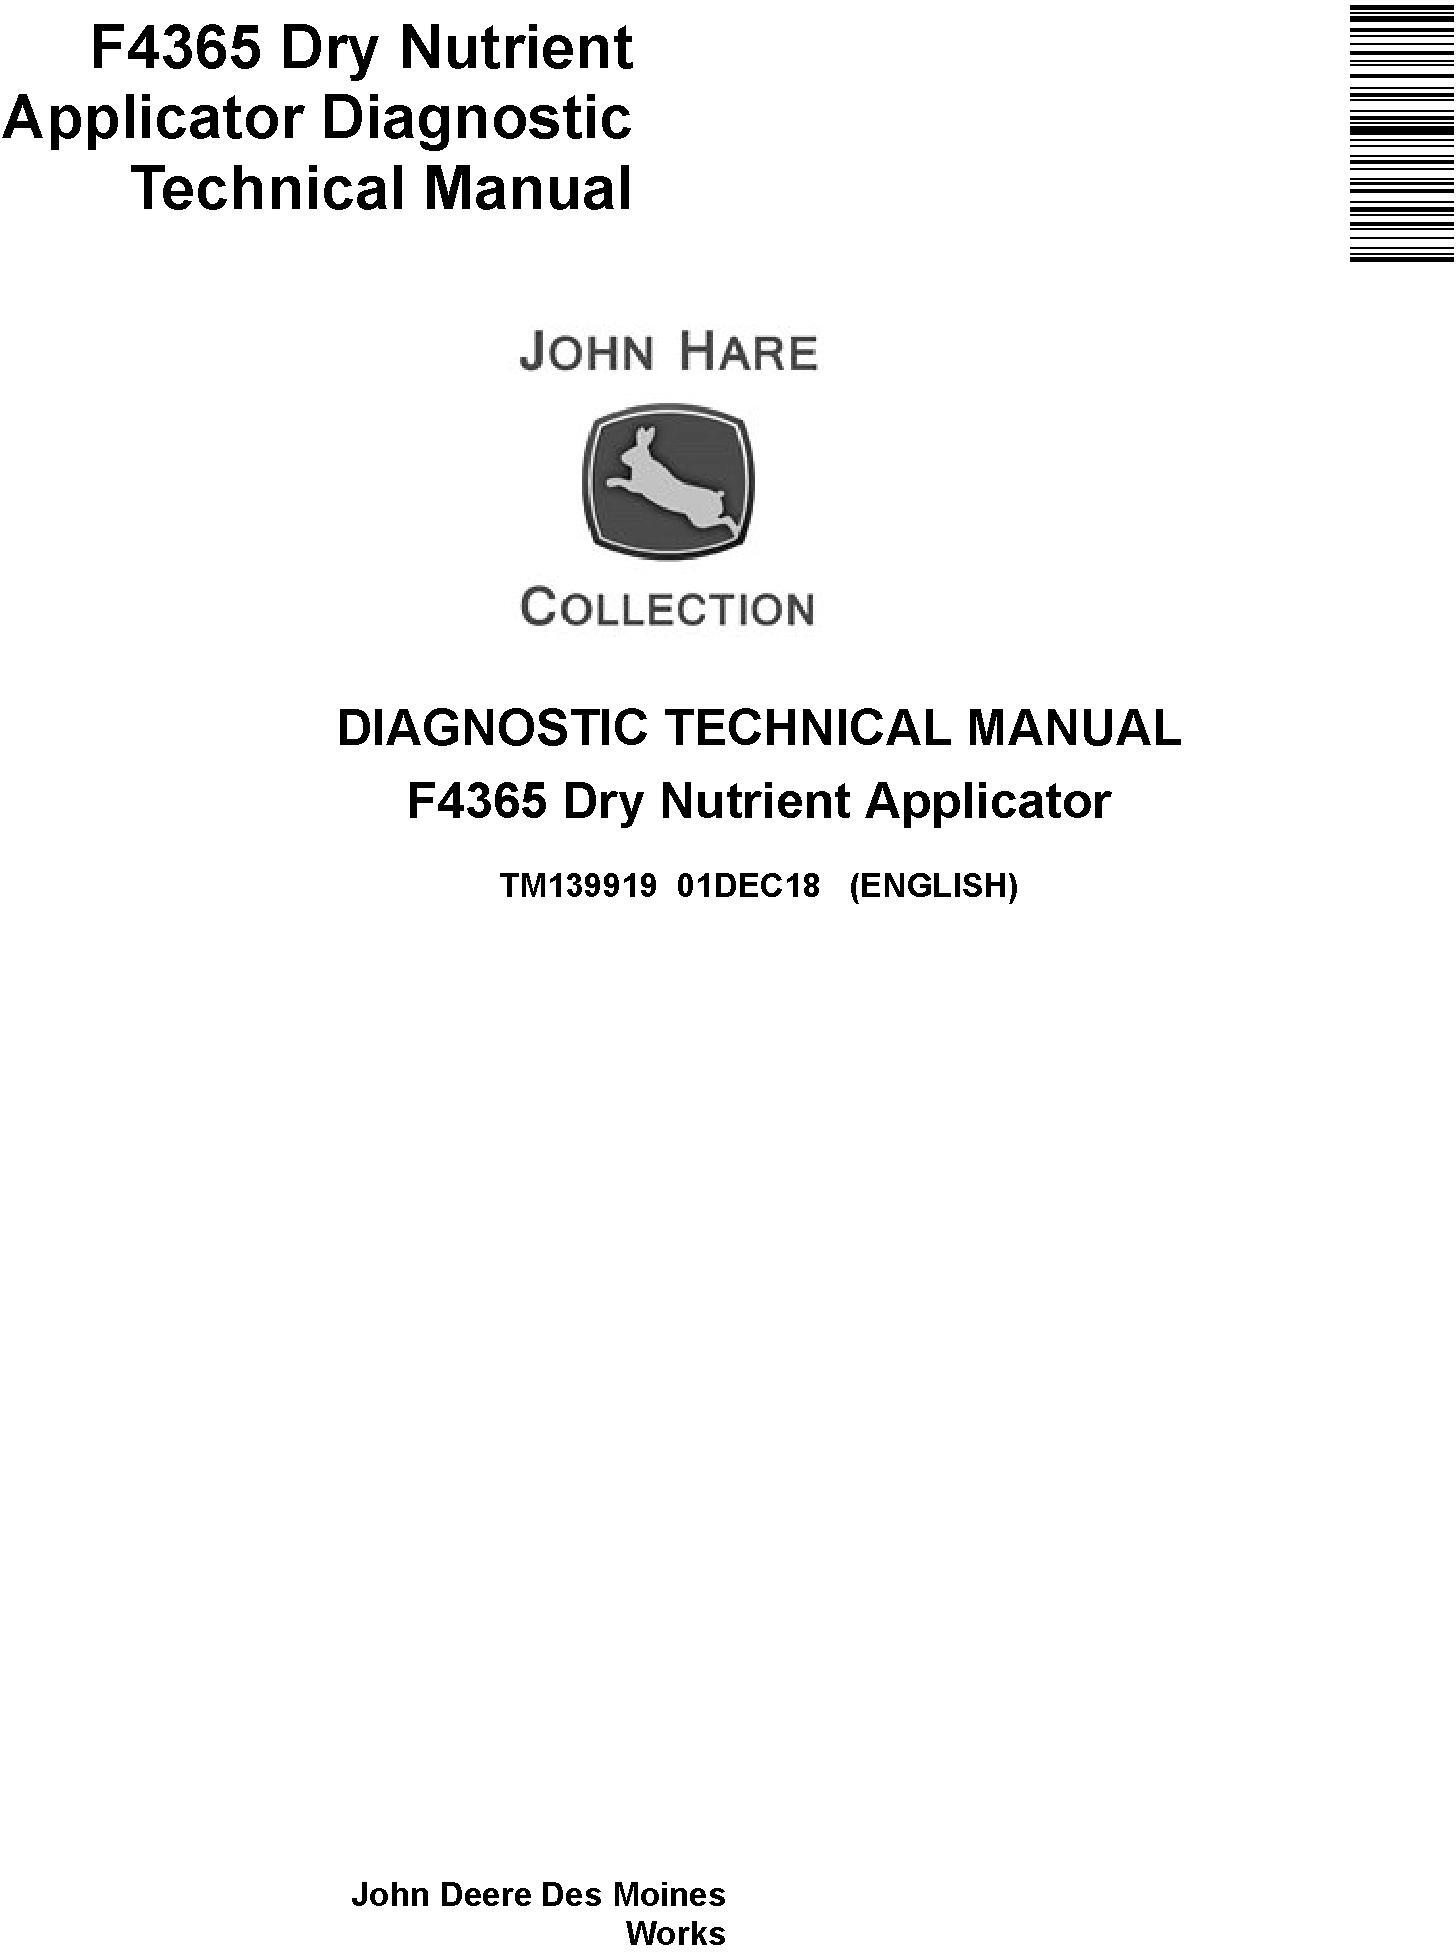 John Deere F4365 Dry Nutrient Applicator Diagnostic Technical Manual TM139919